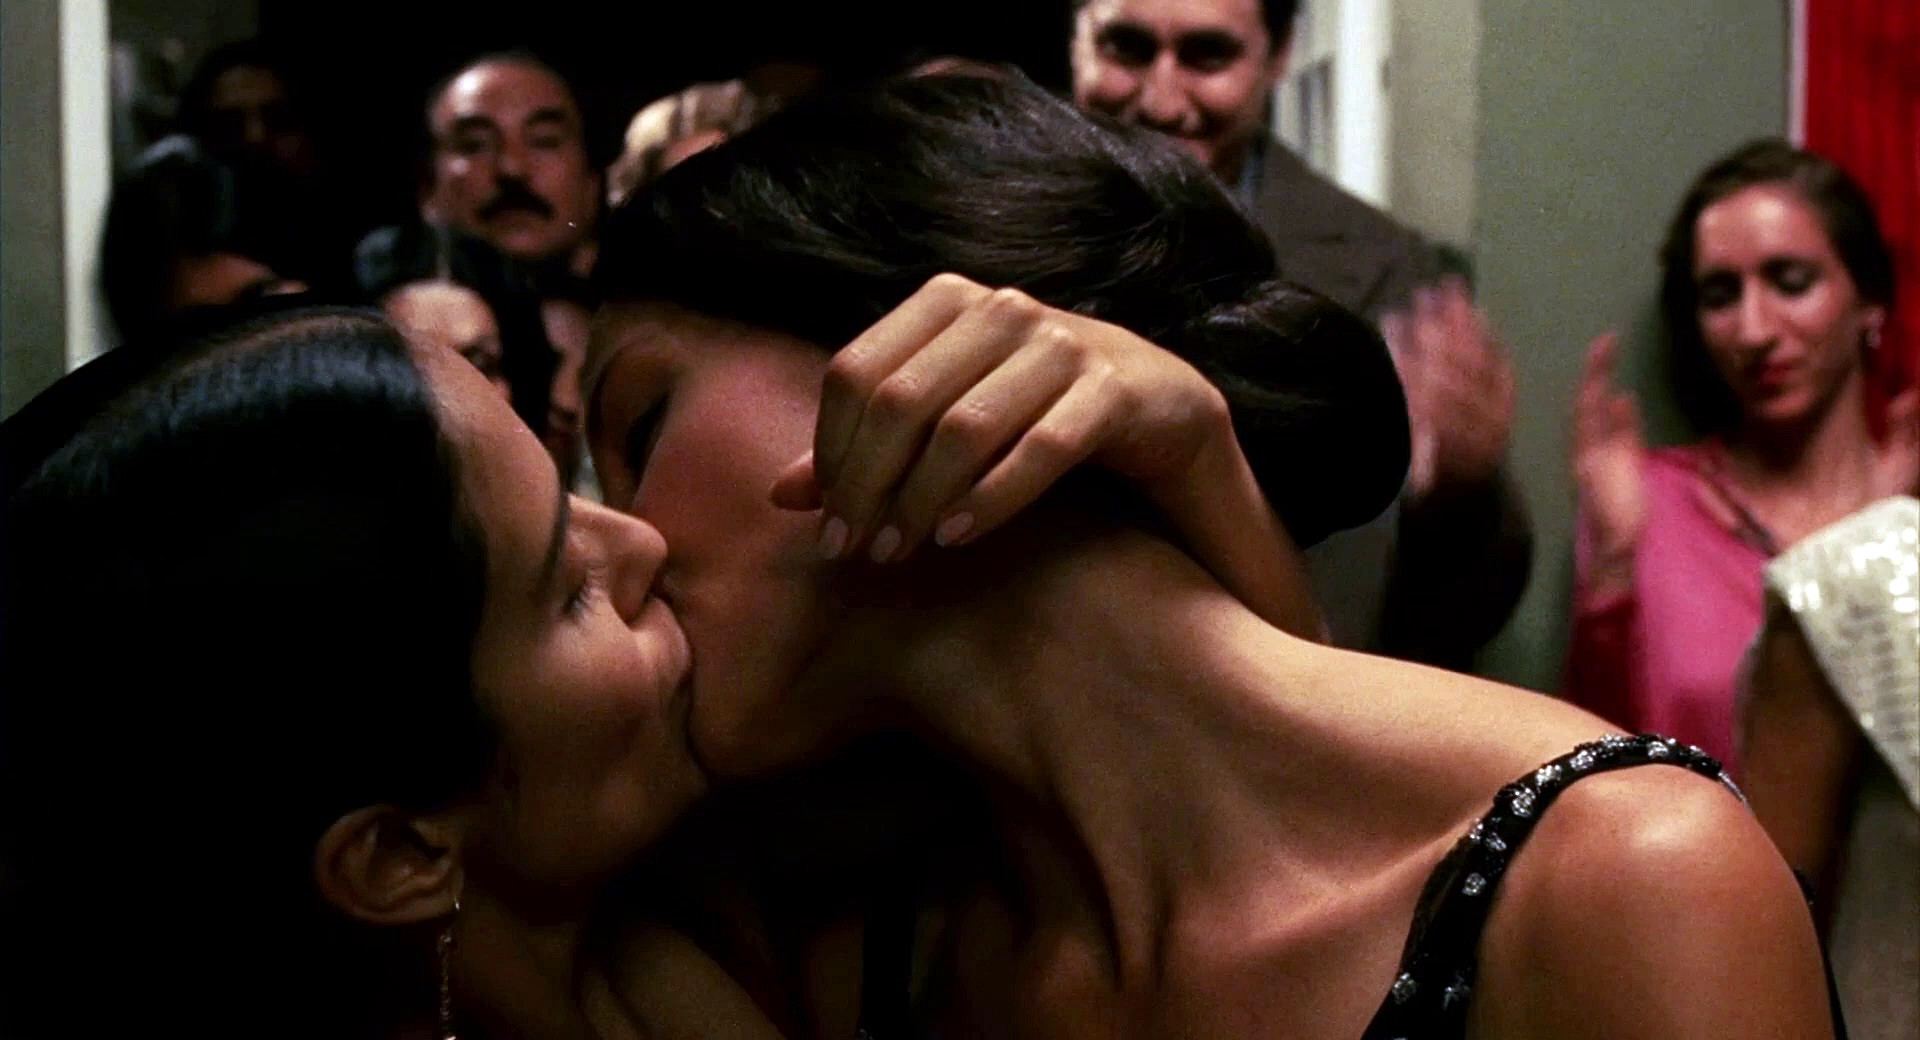 Salma Hayek Hot Sex & Lesbian Scenes in "Frida" Movie. 